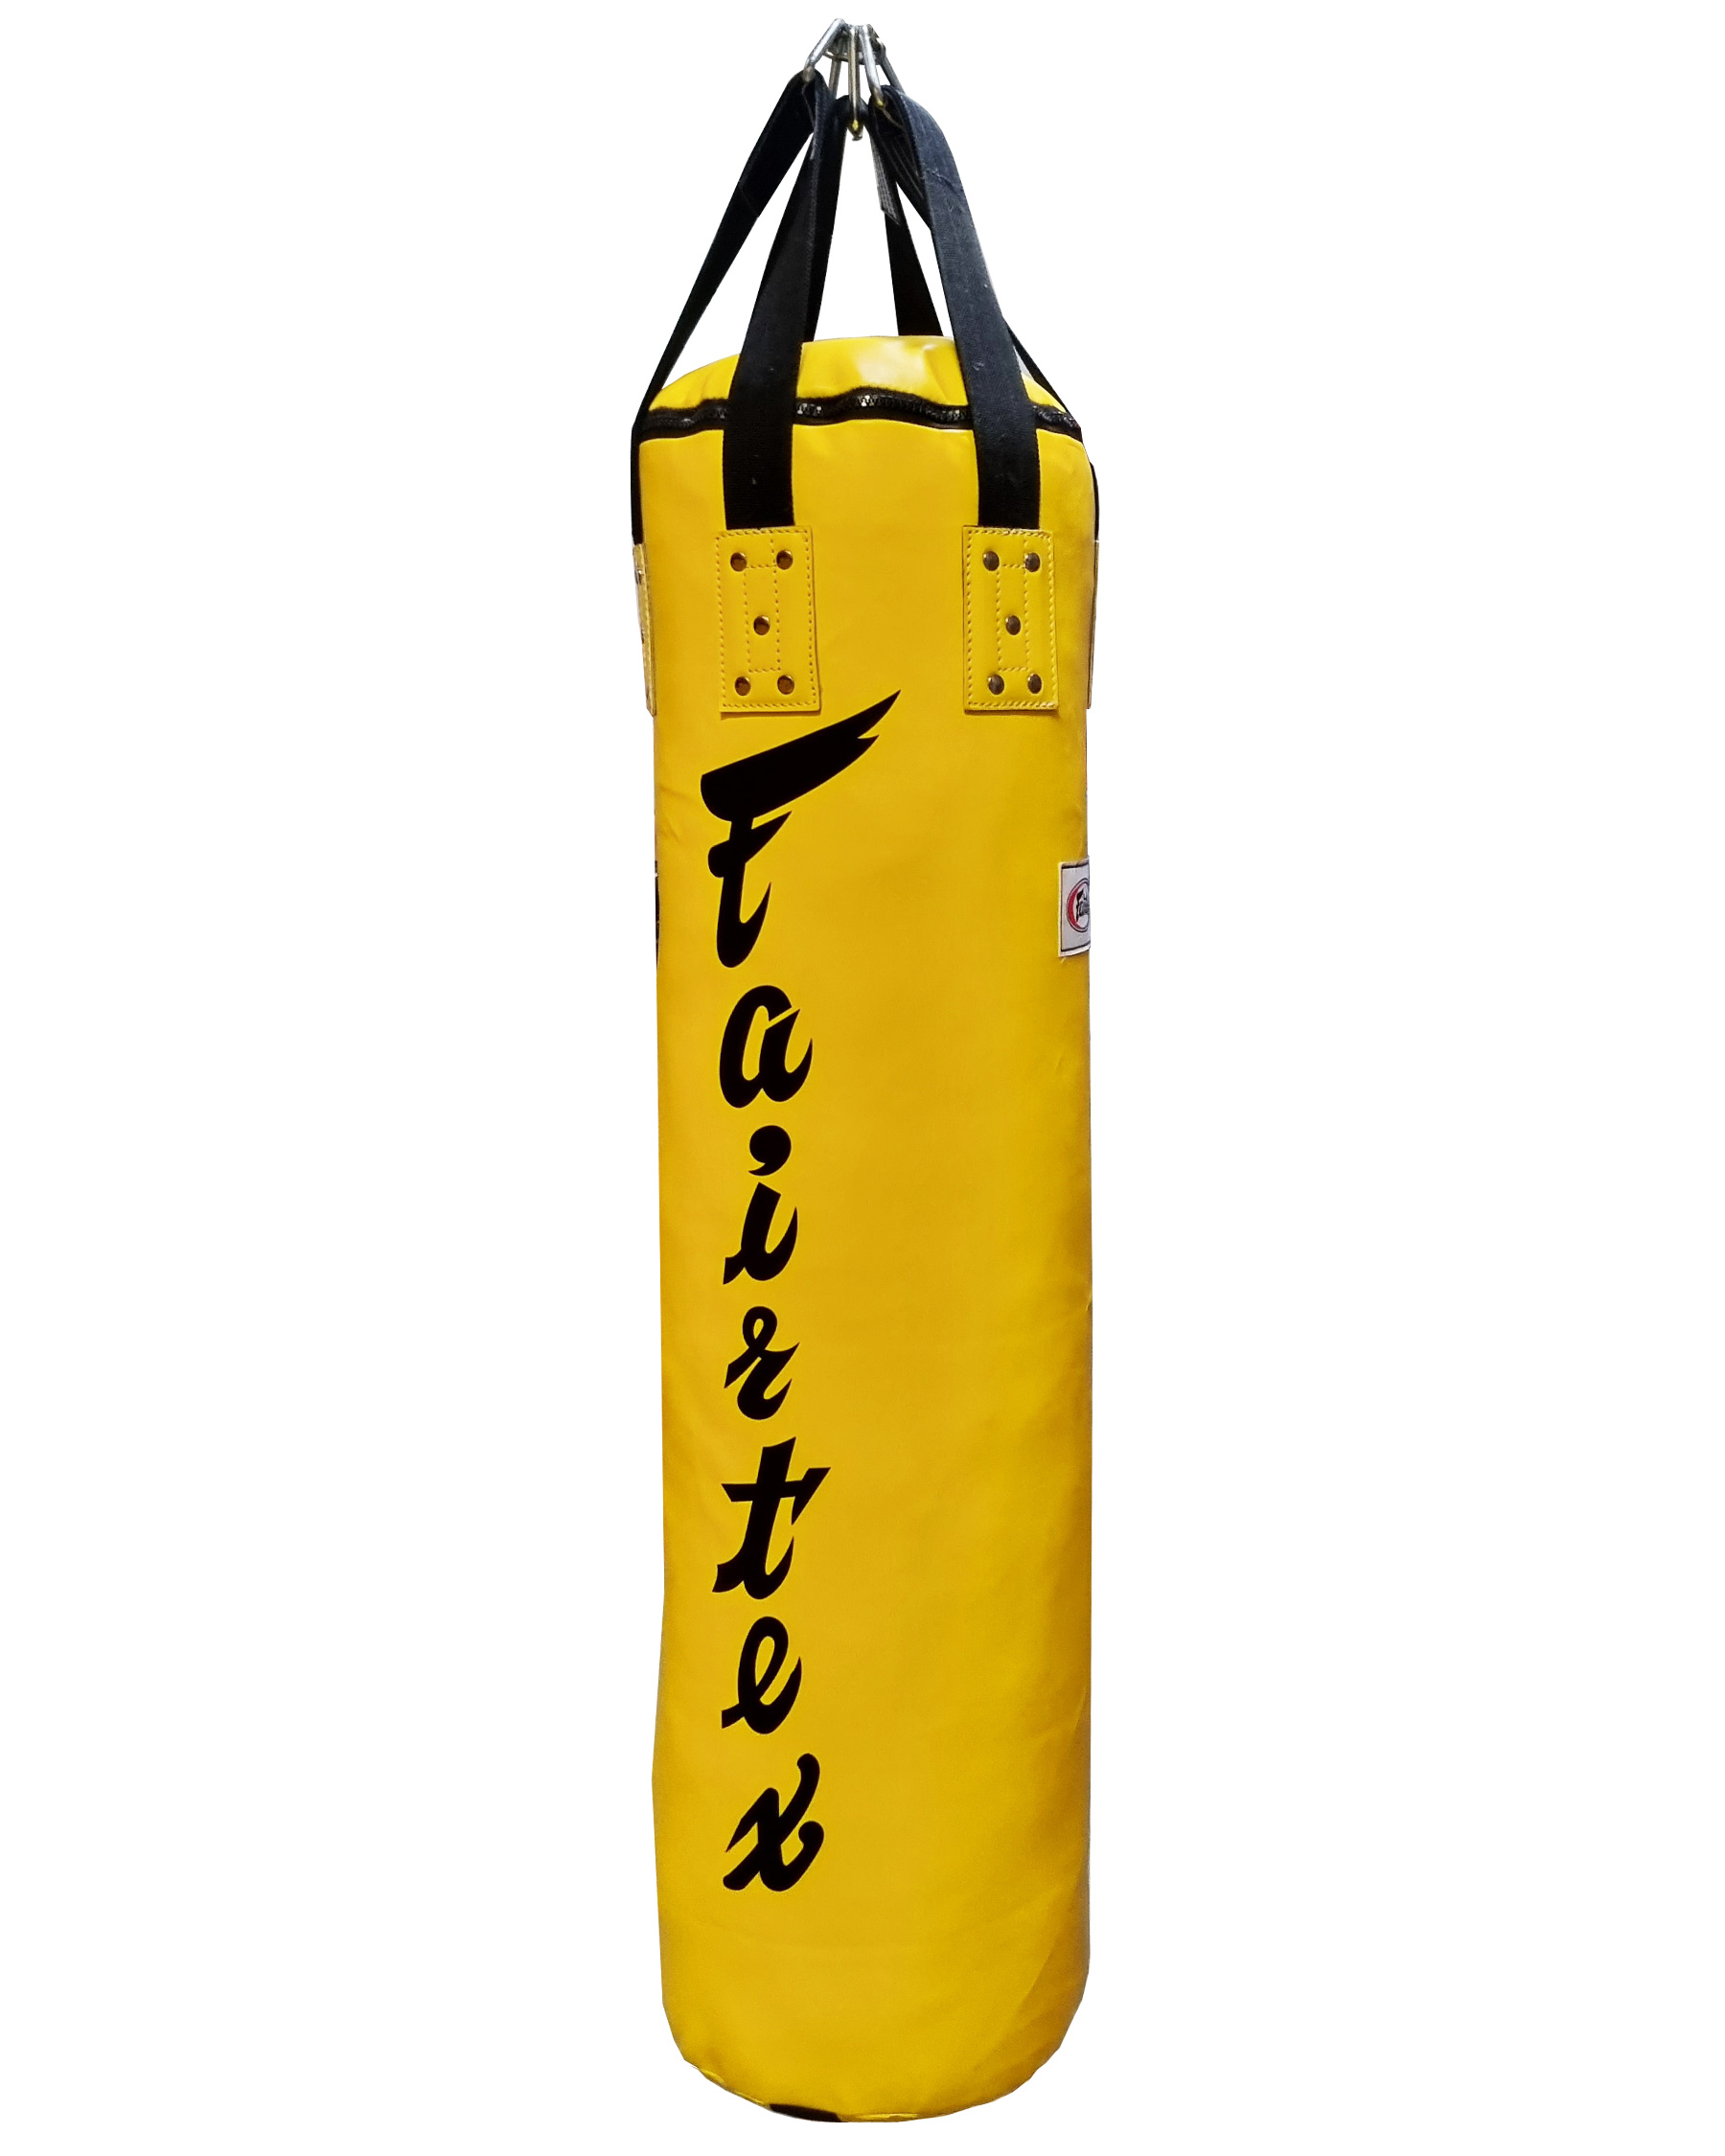 Fairtex HB5 4ft -121cm heavy bag Filled